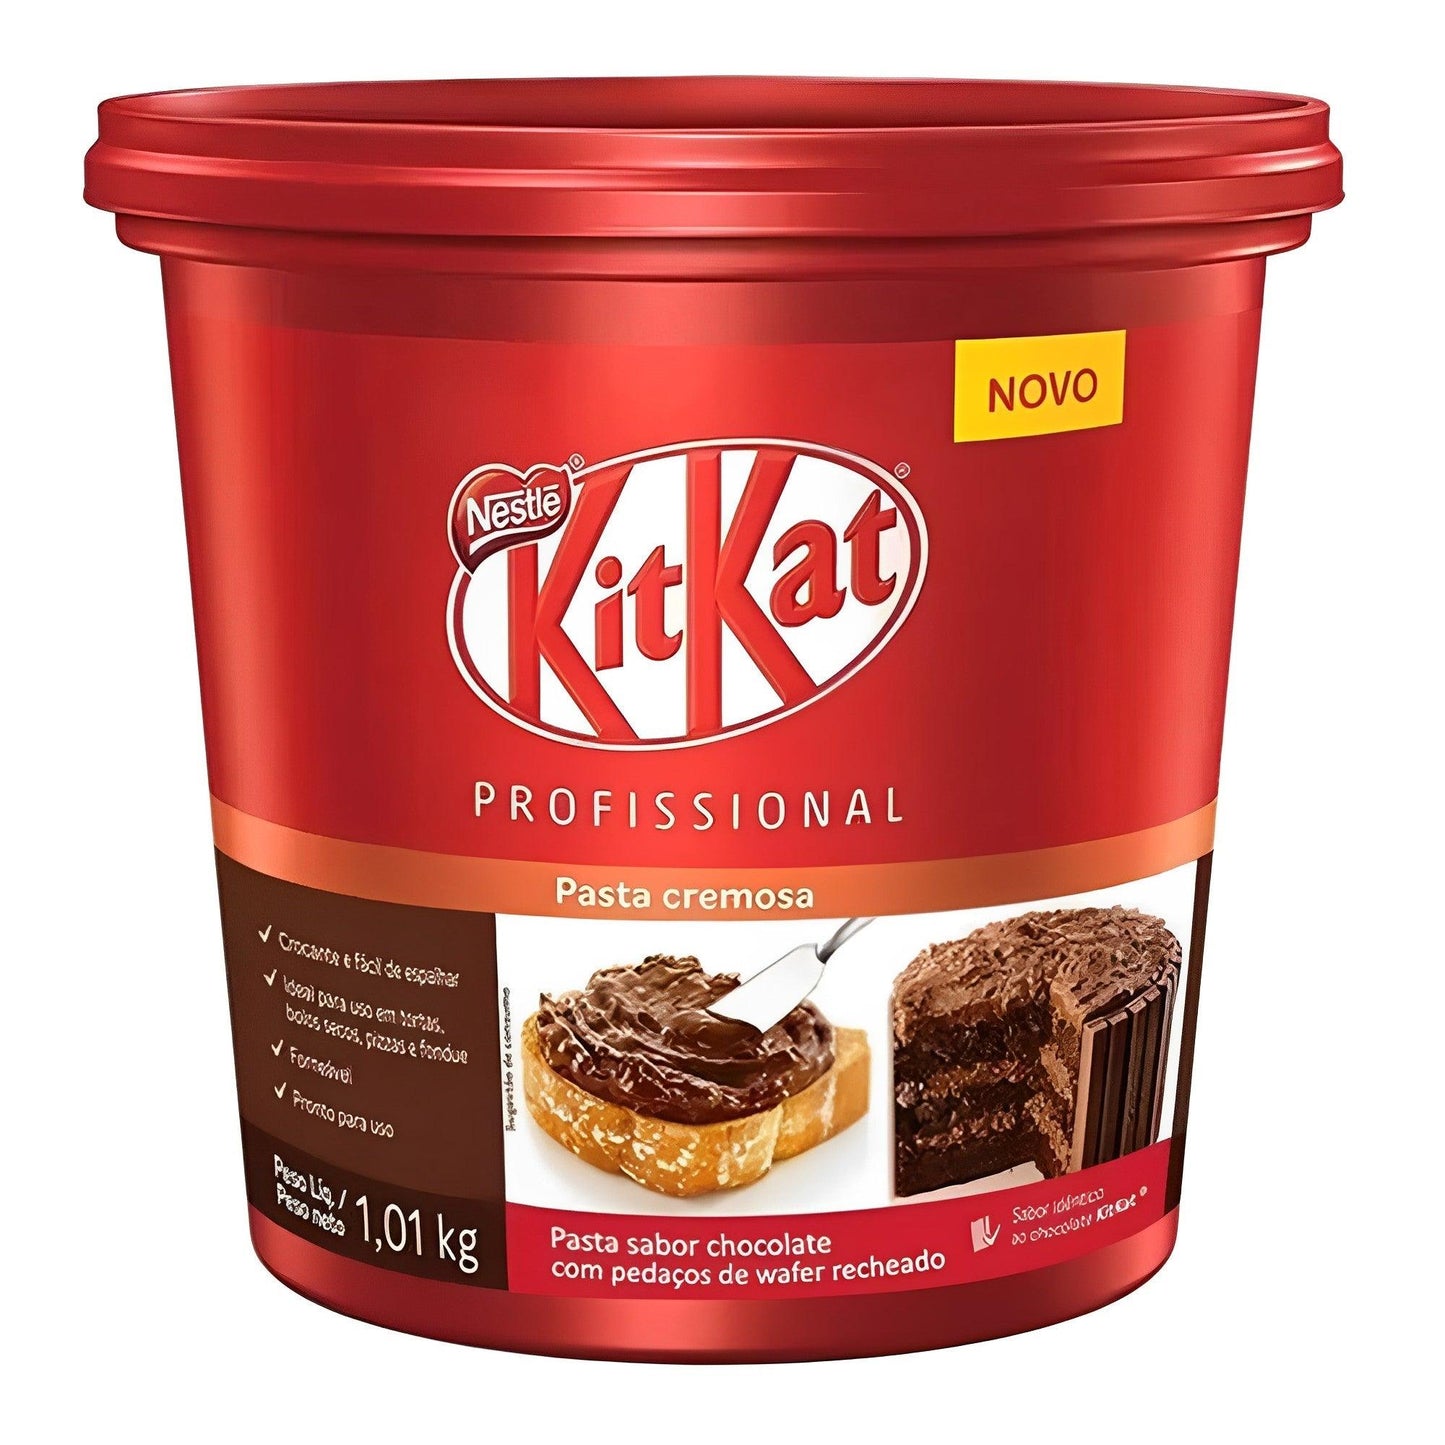 Nestlé Kit Kat Professional Creamy Filling 35.63 oz - Exclusivity - Brazilian Shop